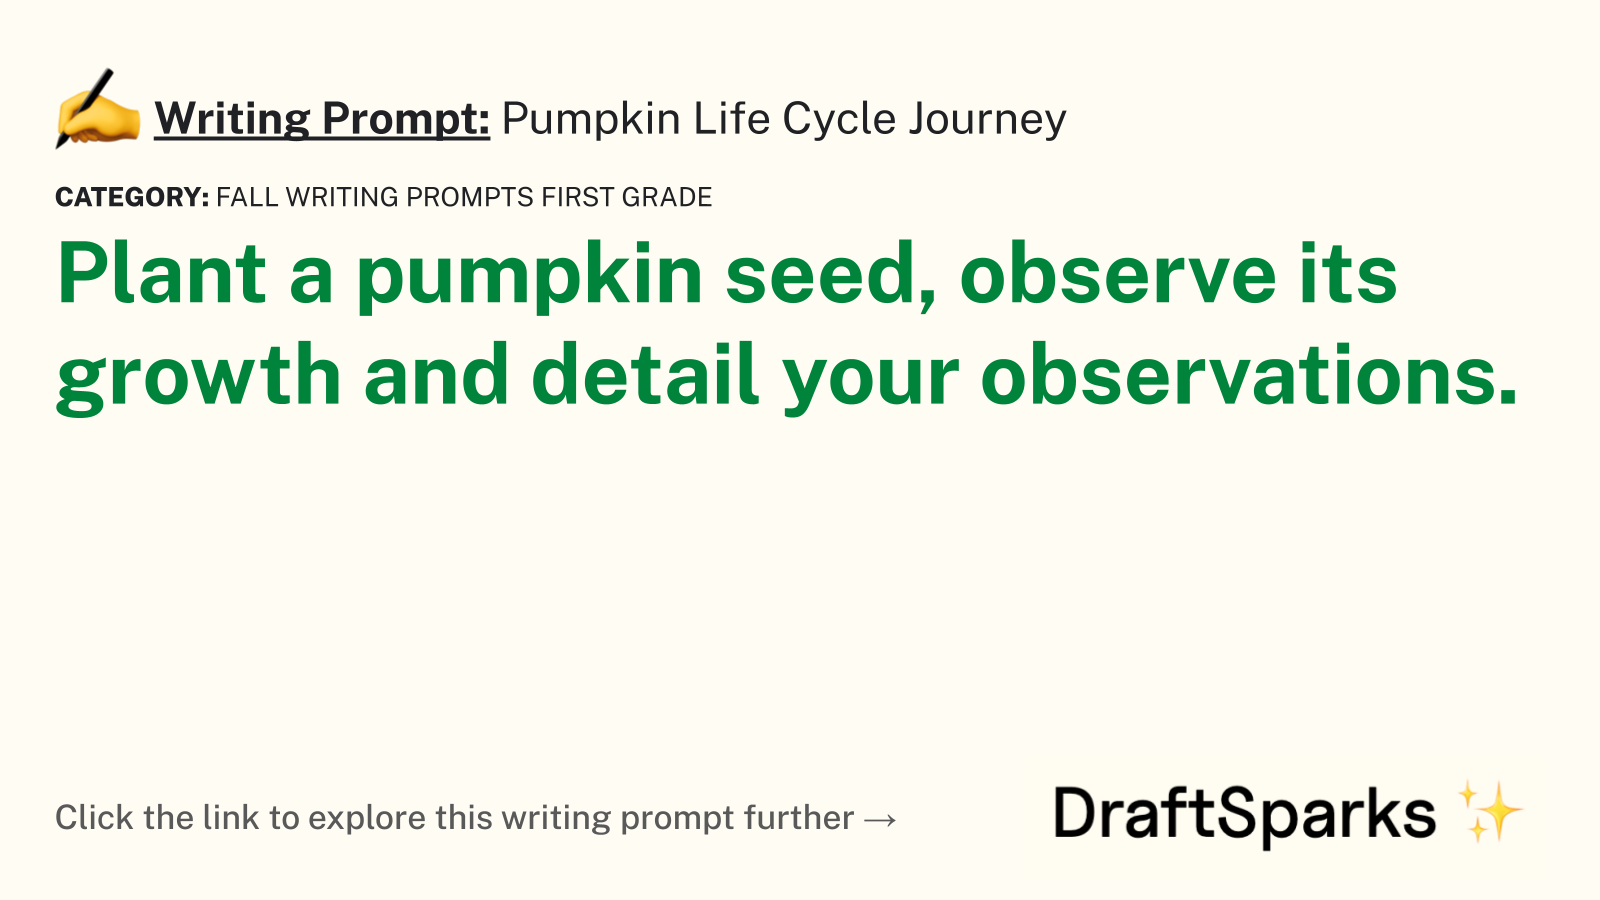 Pumpkin Life Cycle Journey